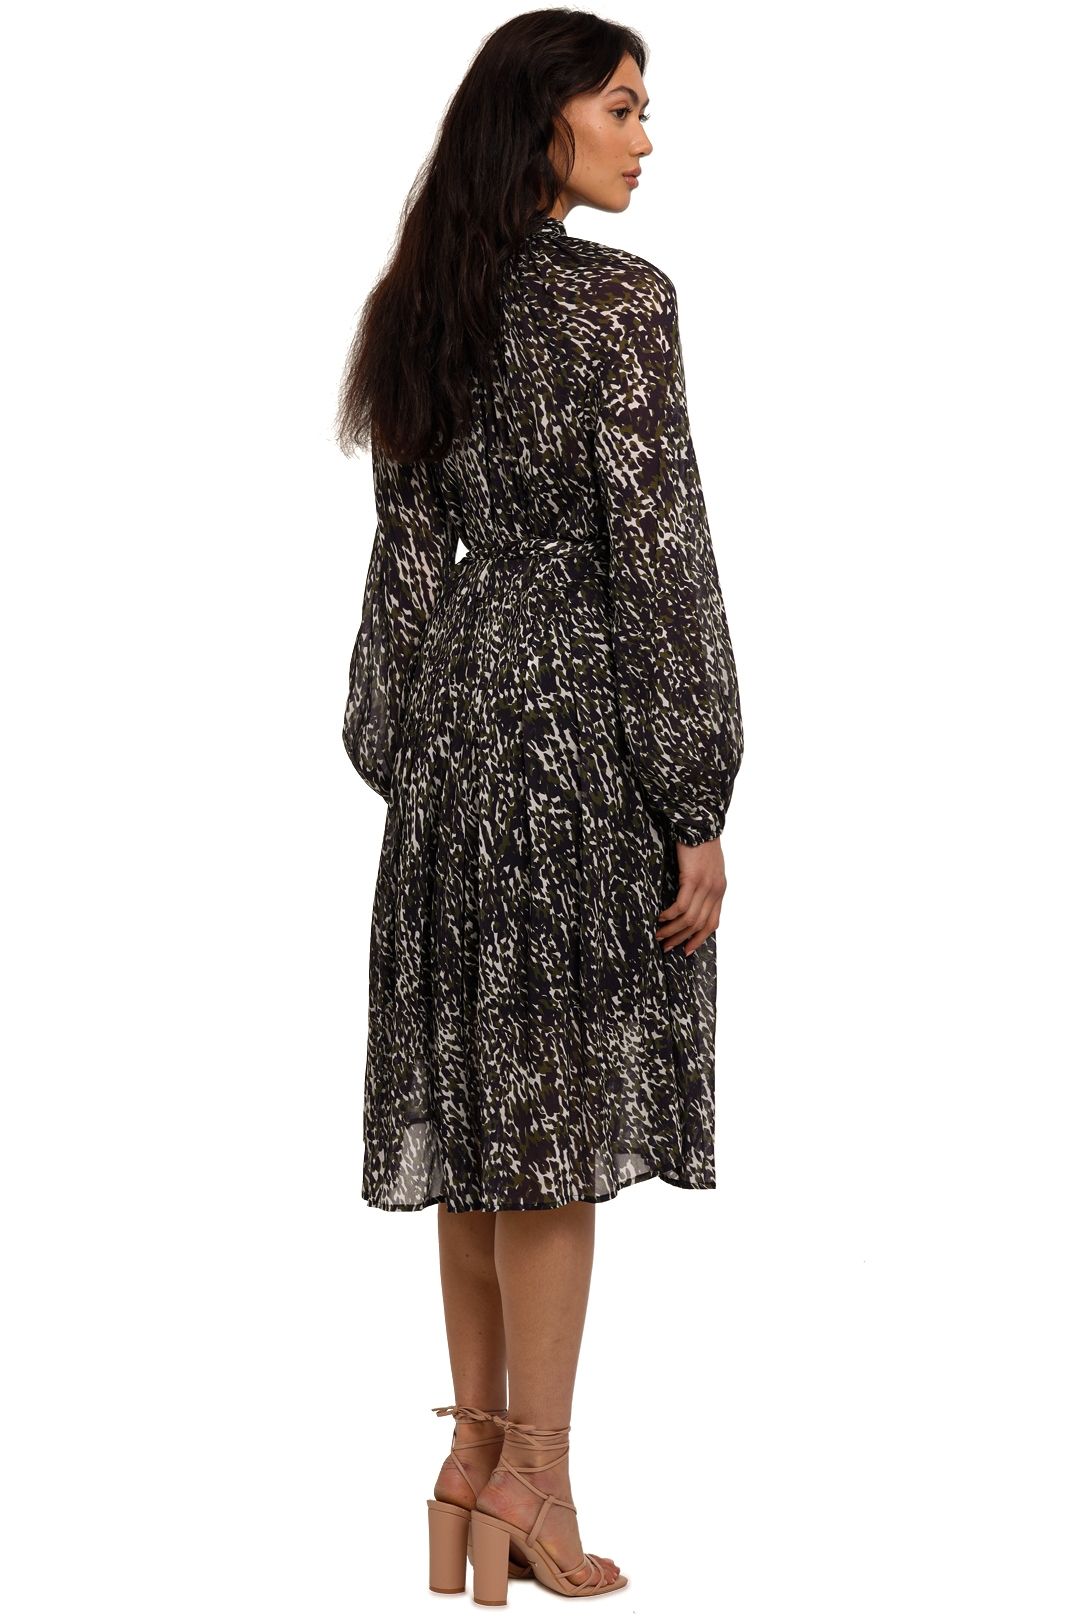 Kate Sylvester Shirley Printed Dress long sleeve